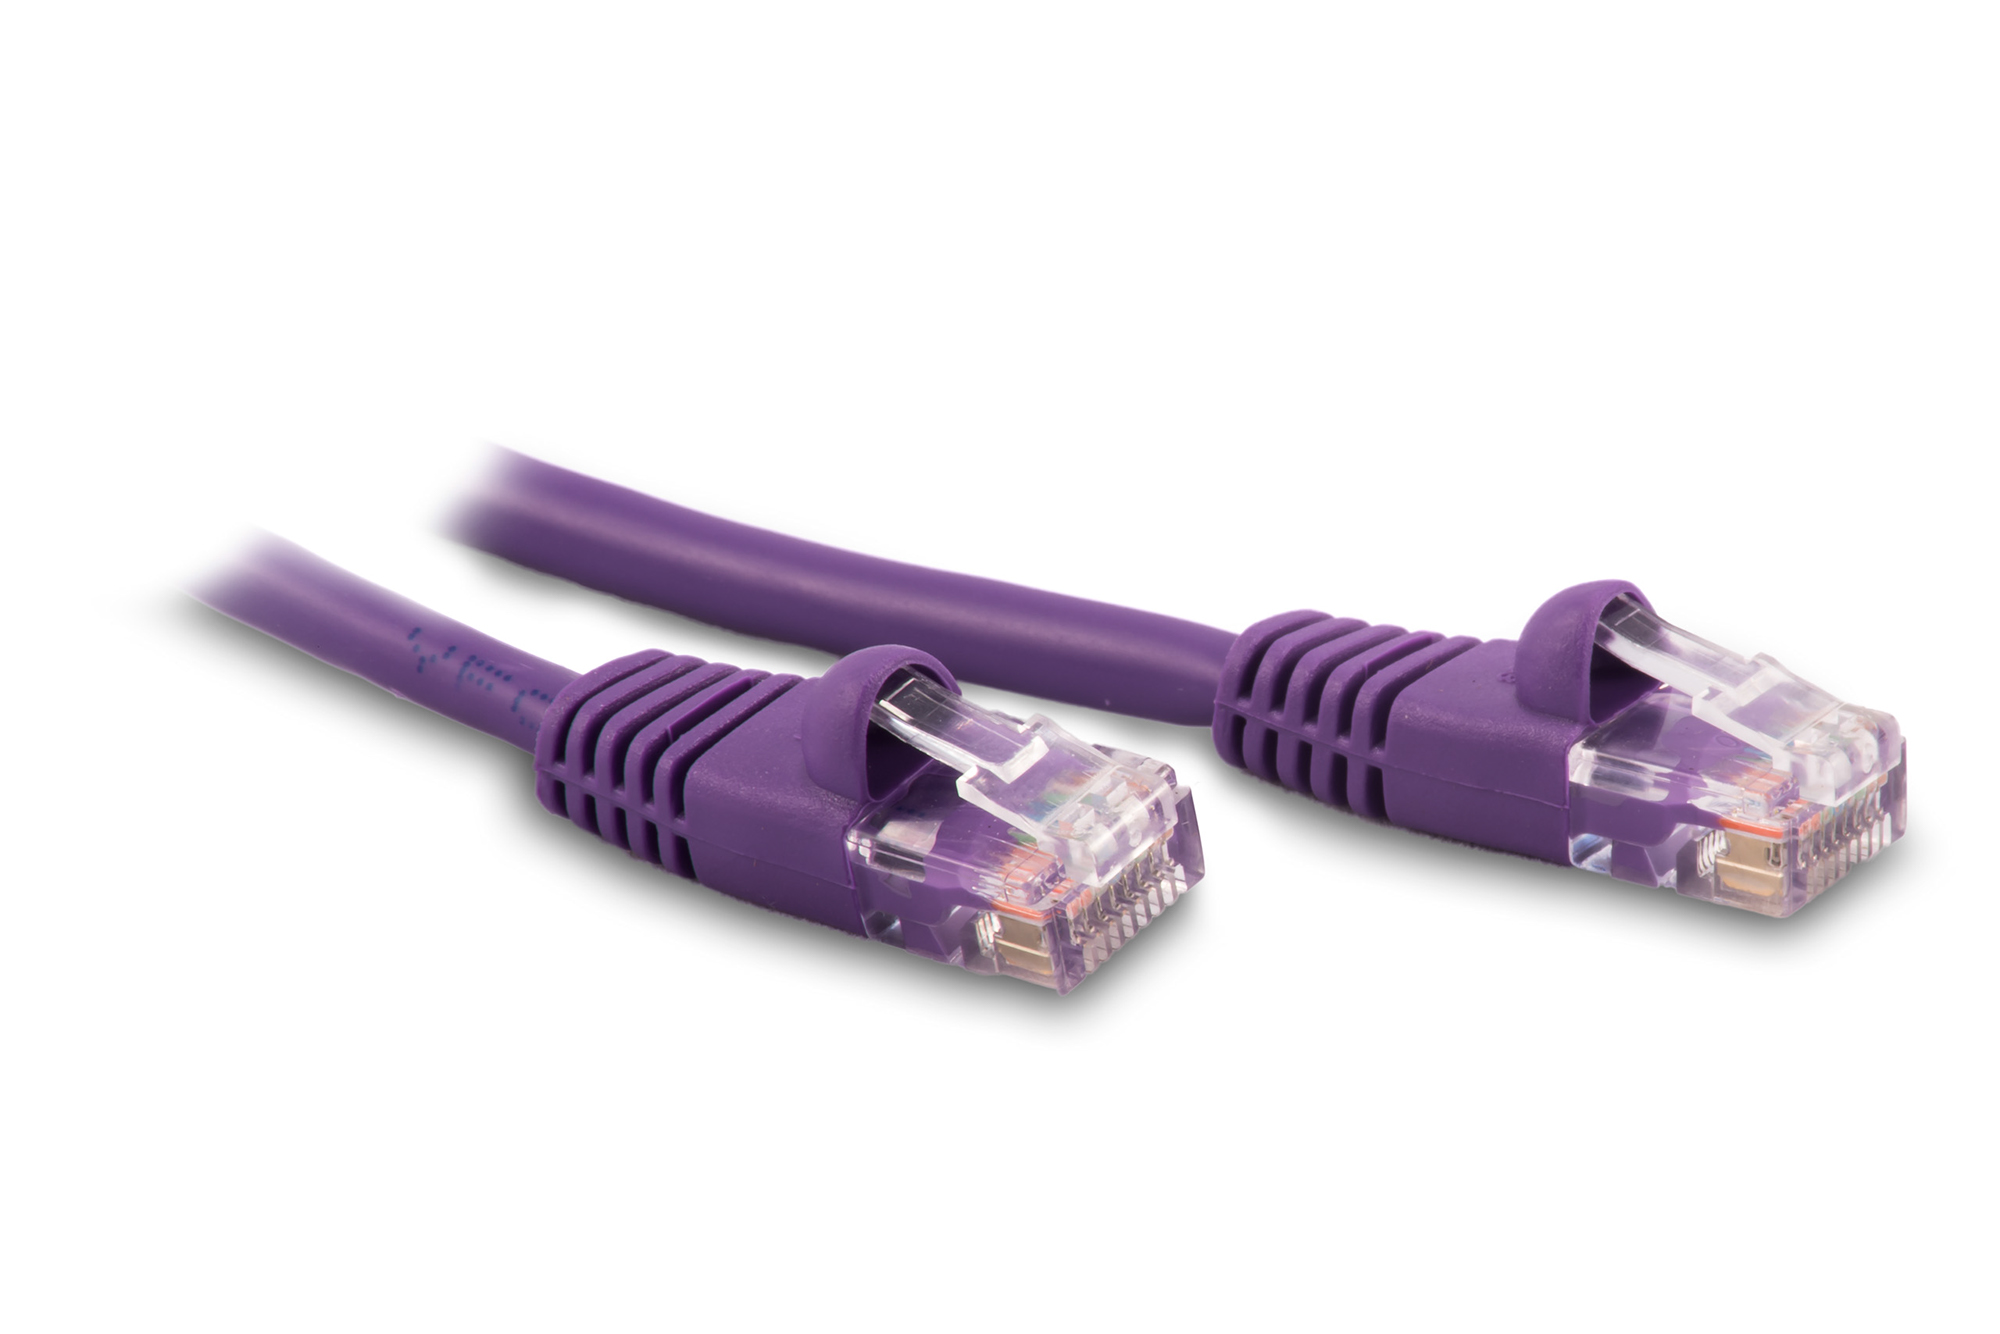 10ft Cat6 Ethernet Patch Cable - Violet Color - Snagless Boot, Stranded, RJ45, 550Mhz, 24AWG